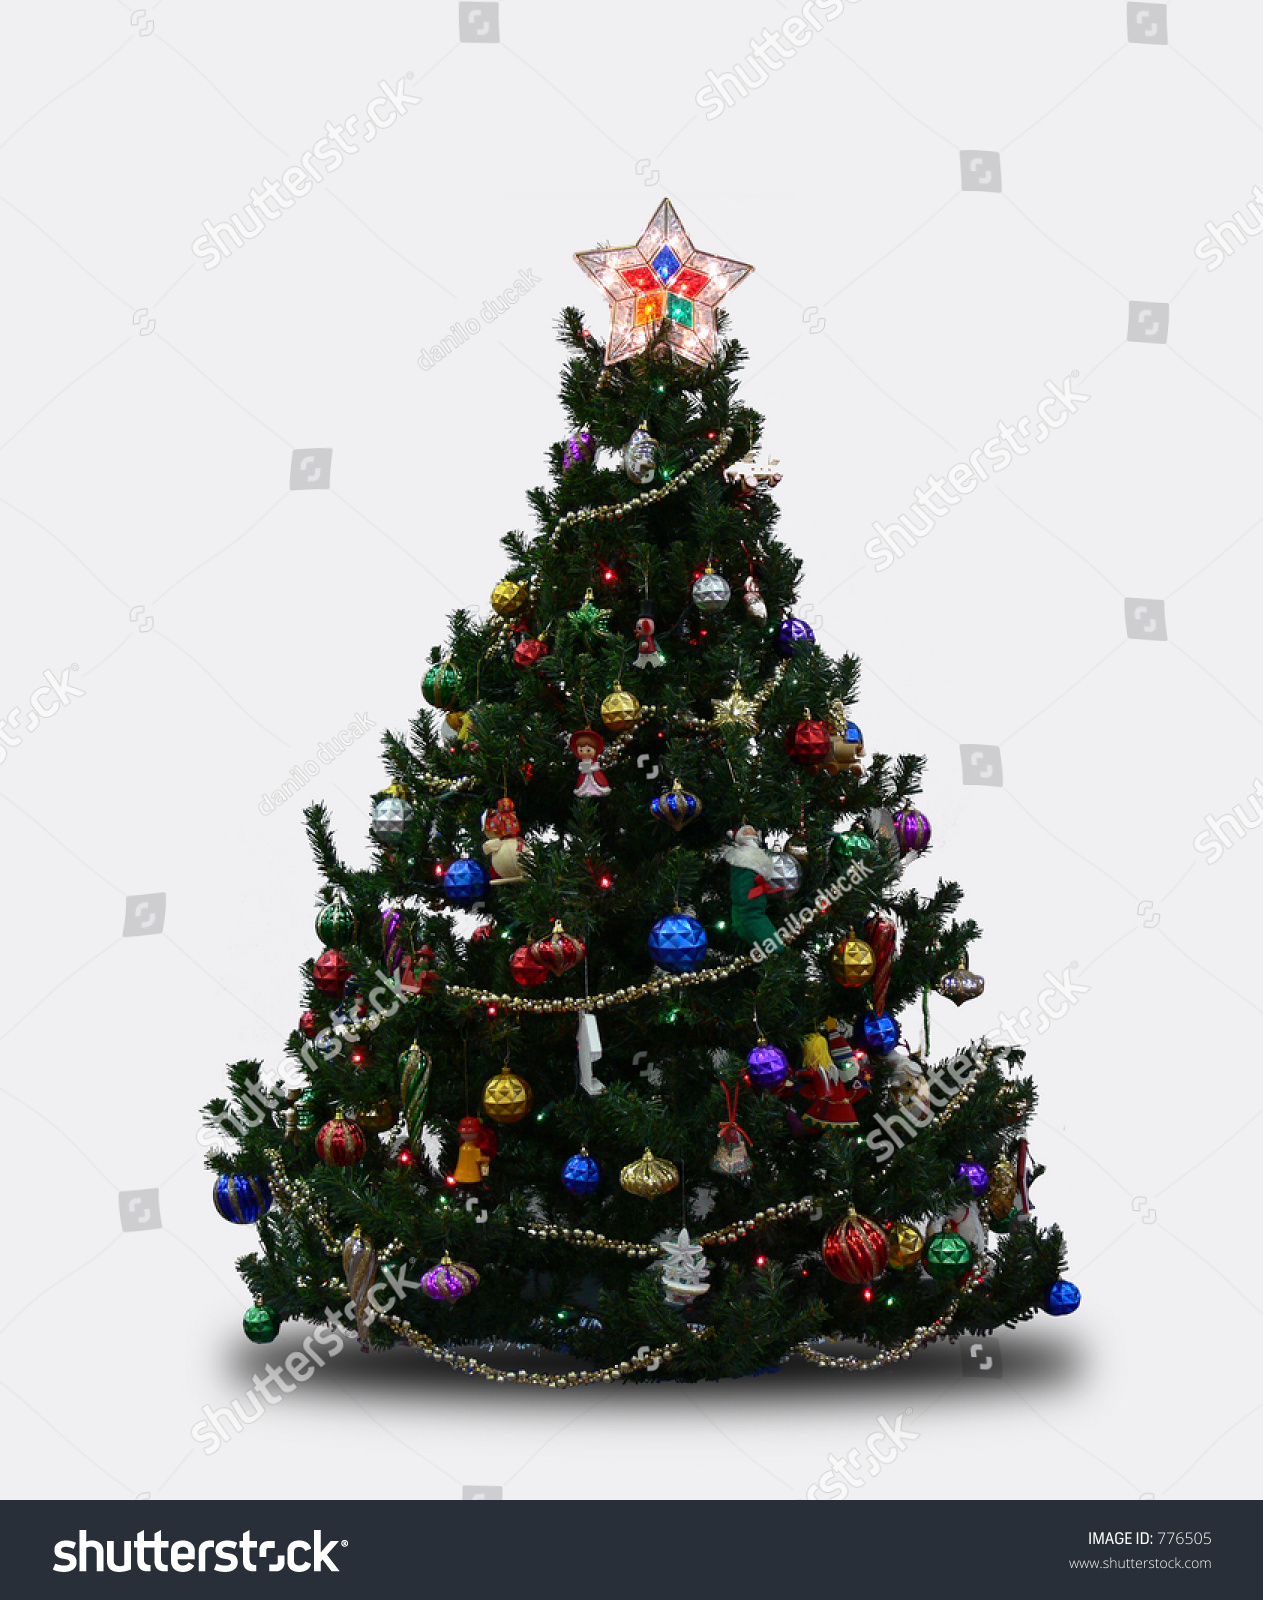 Christmas Tree Stock Photo 776505 : Shutterstock